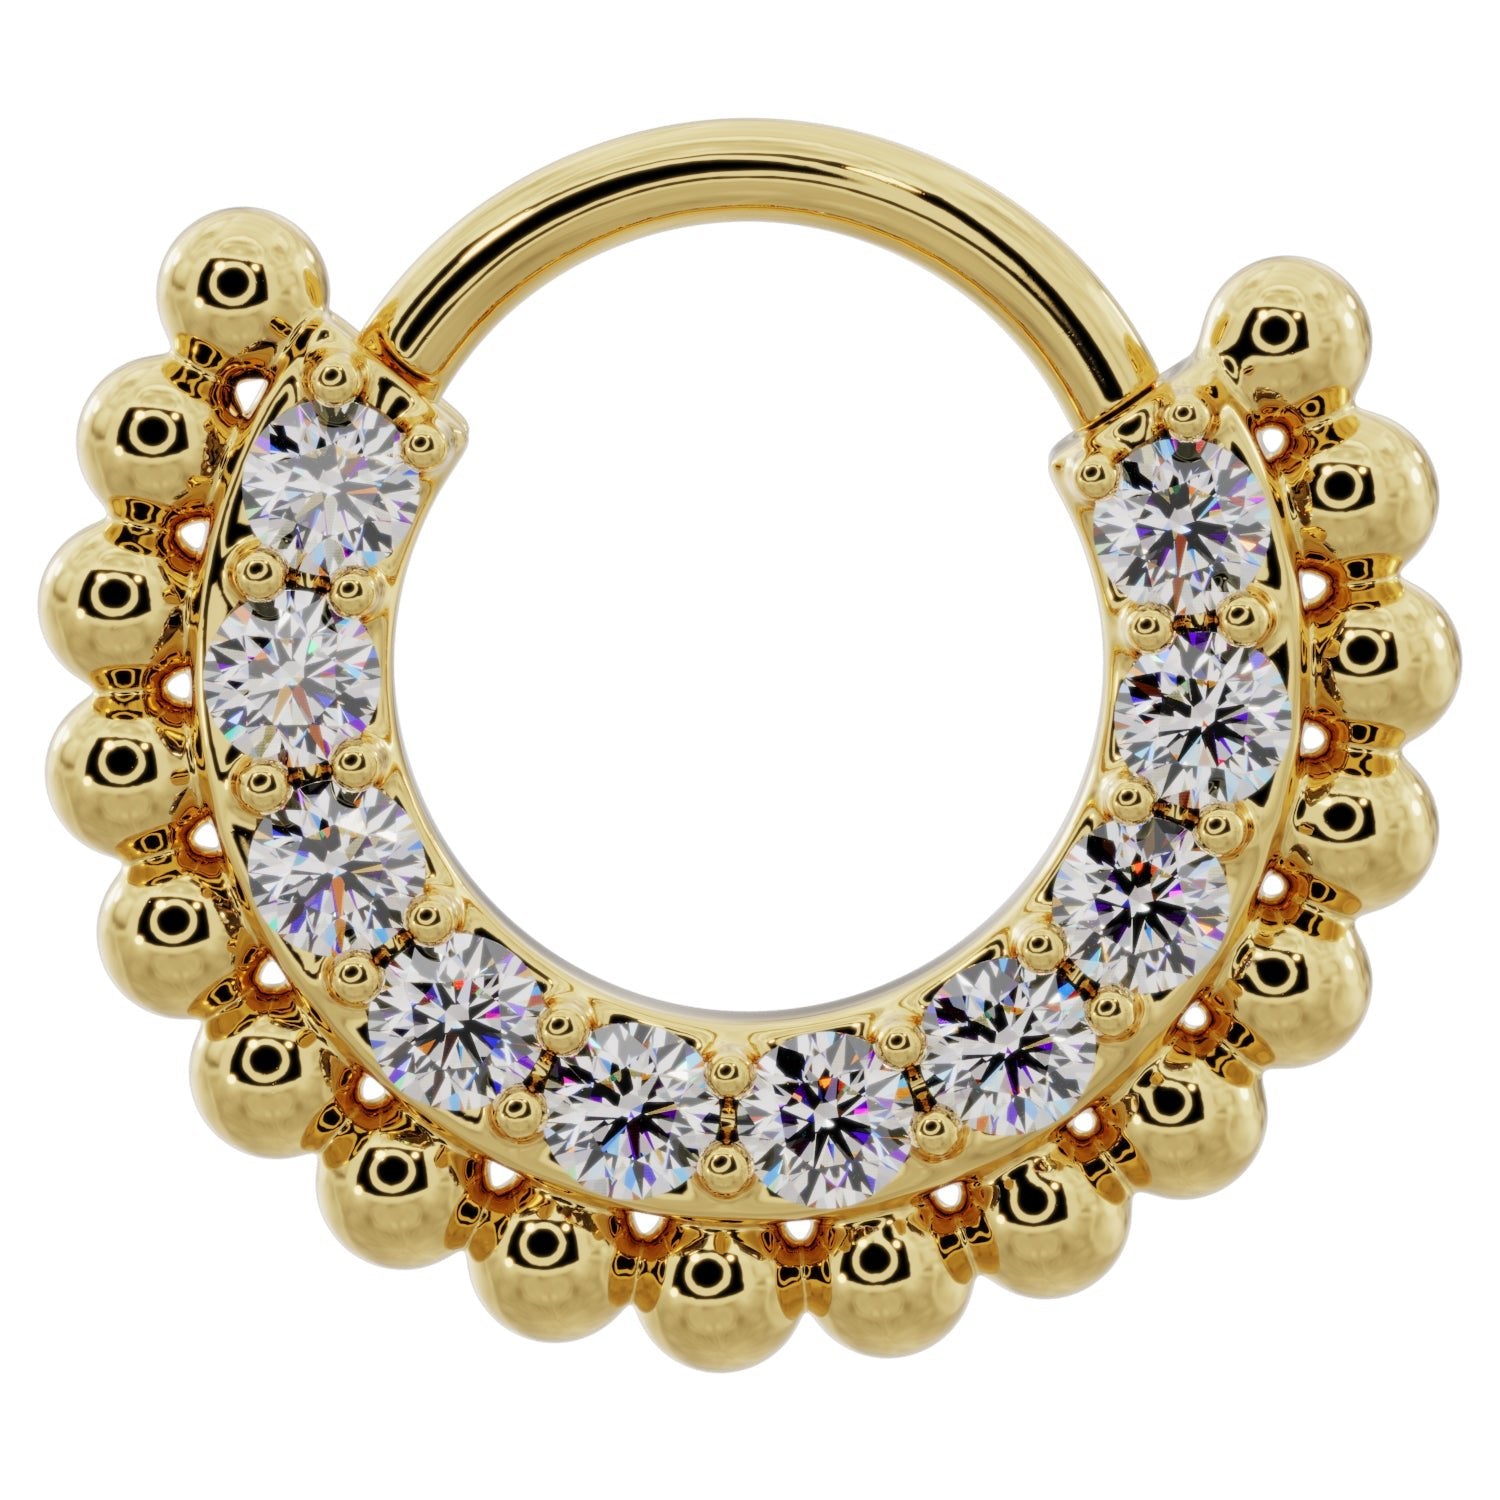 Diamond Beads 14k Gold Clicker Ring Hoop-14K Yellow Gold   16G (1.2mm)   5 16